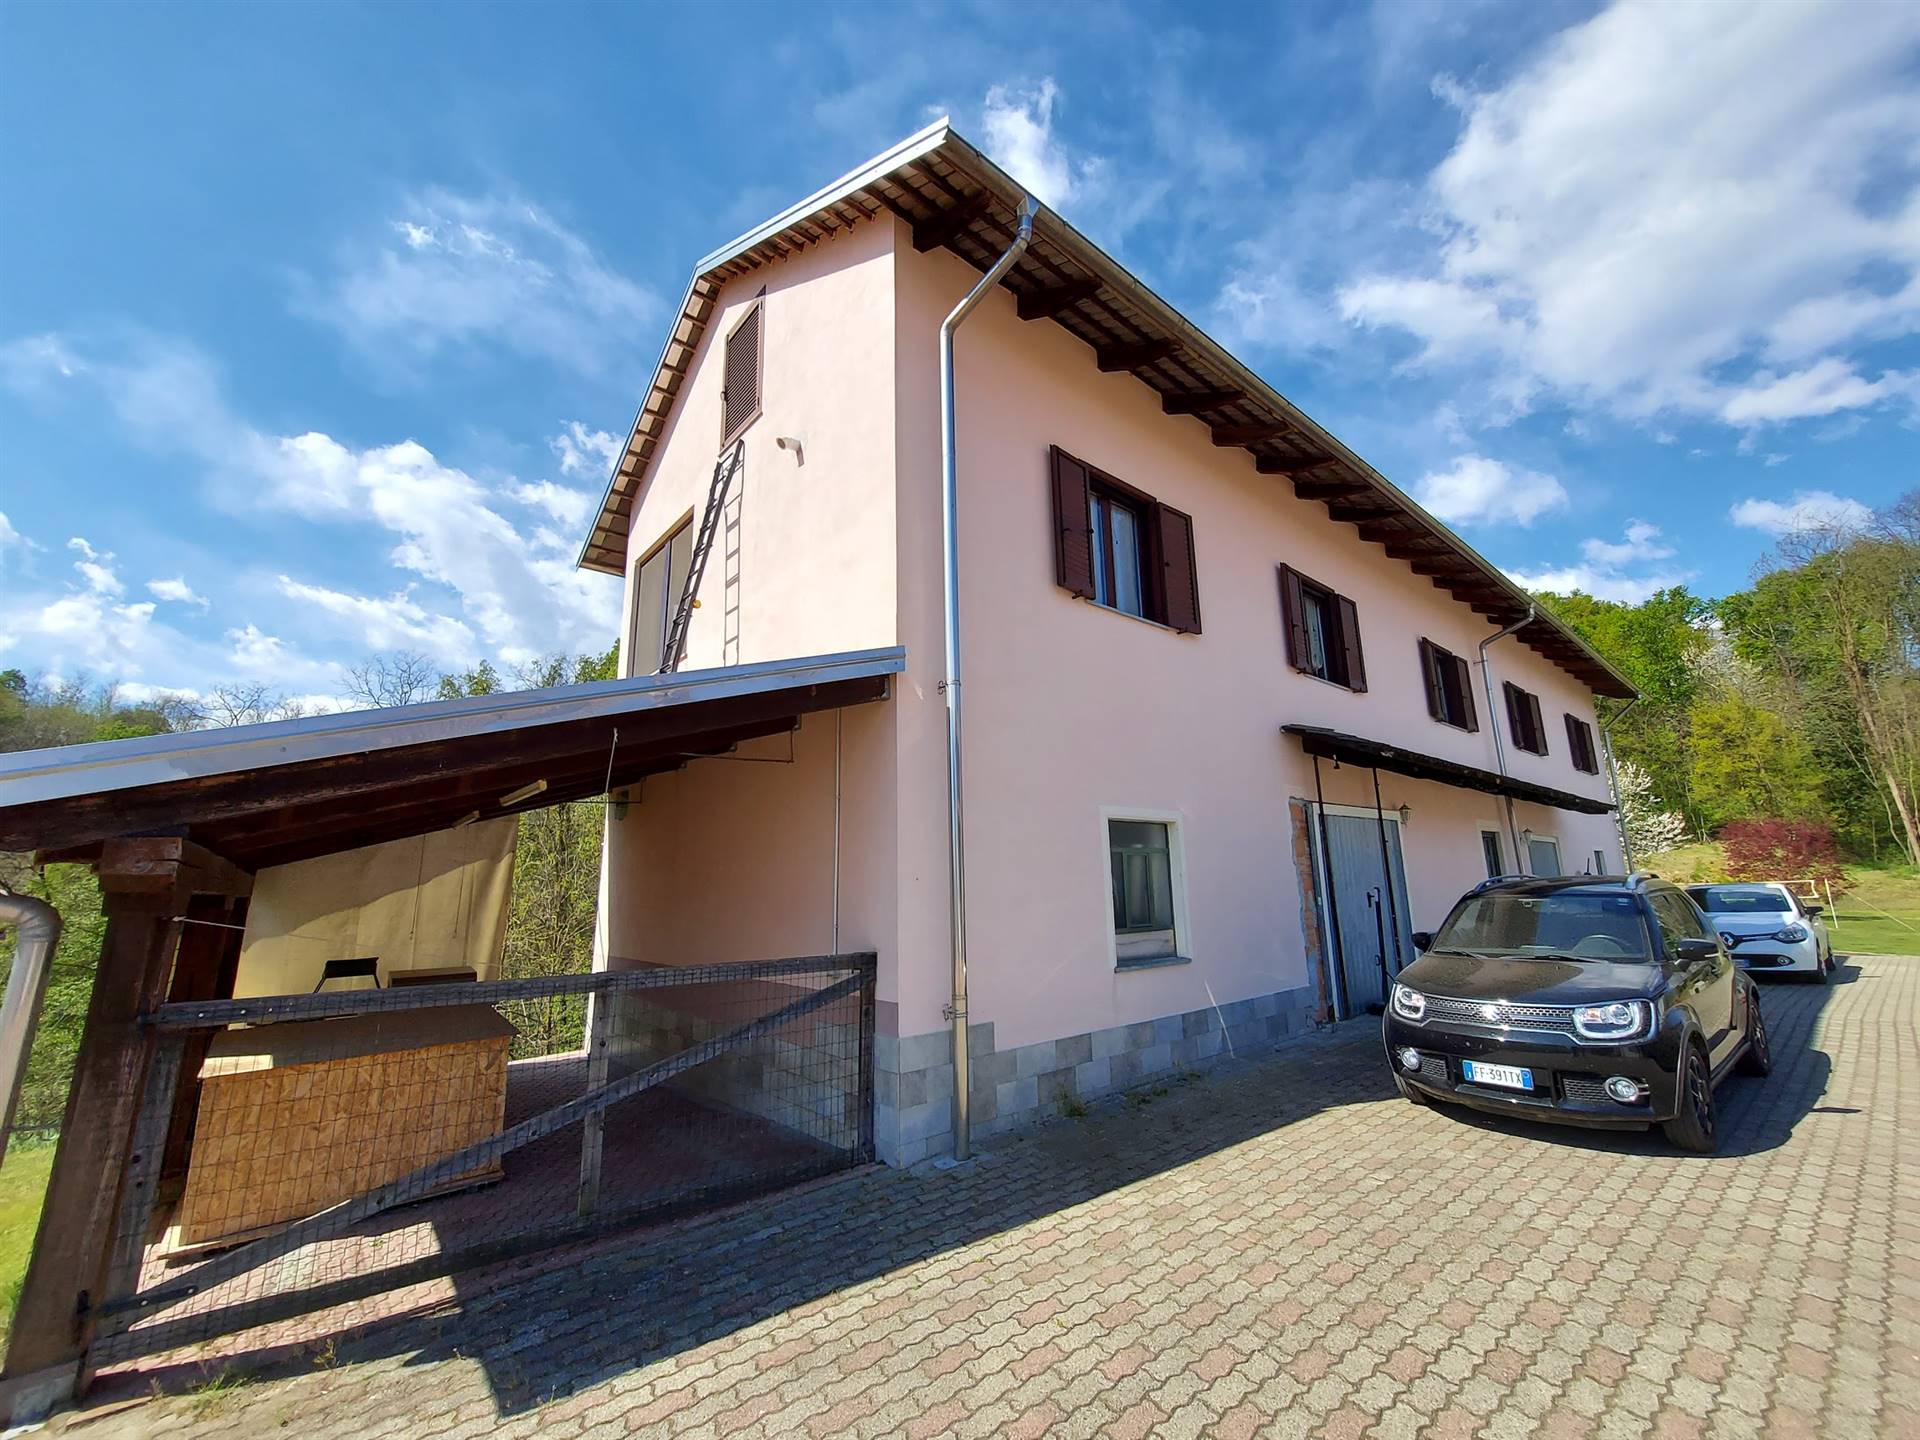 Casa singola in vendita a Mottalciata Biella